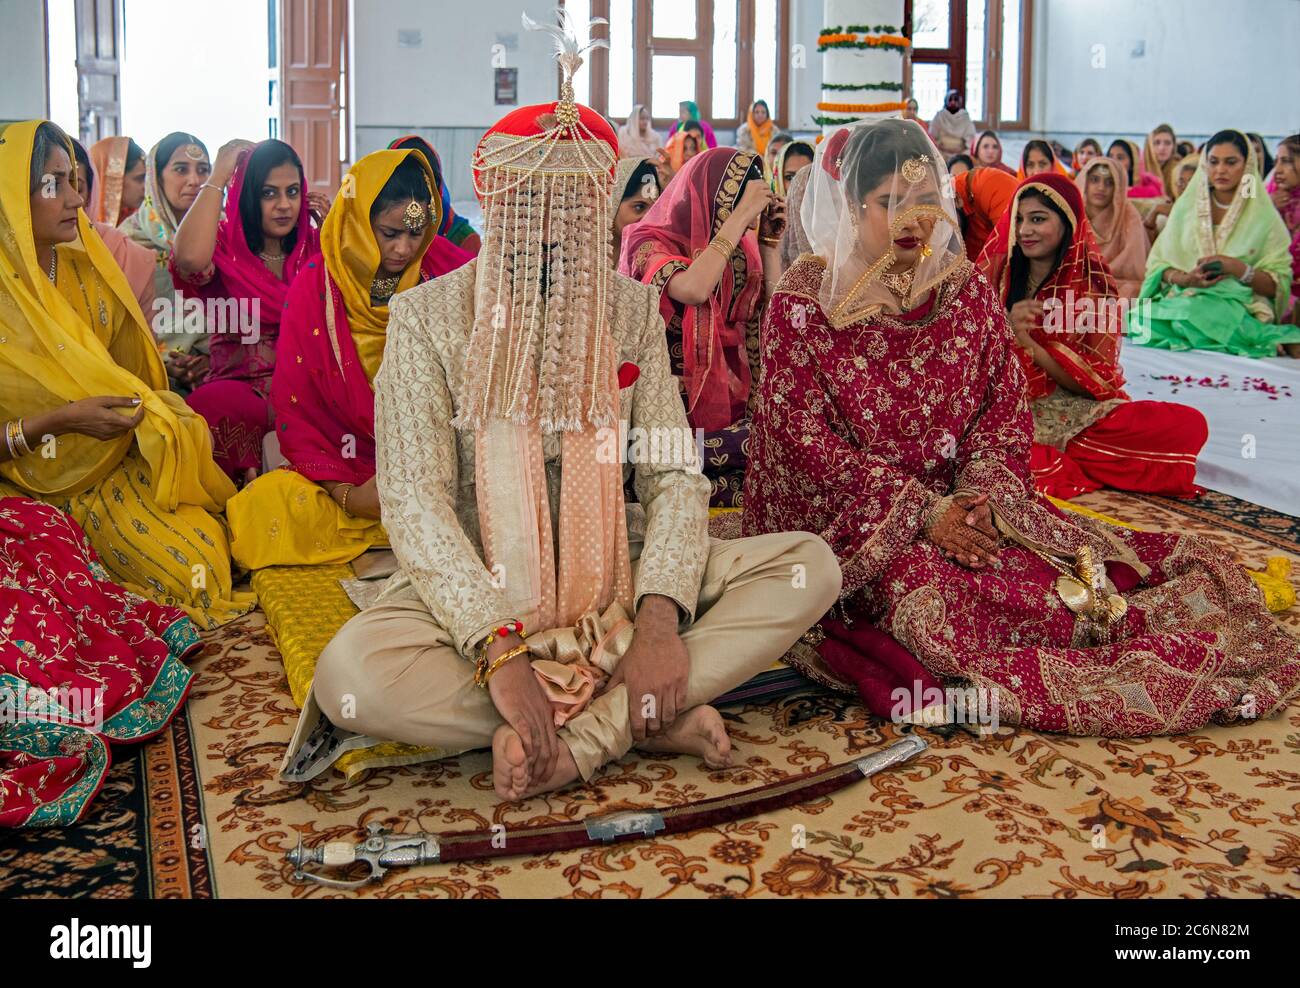 Sikh wedding ceromony with bride and groom Punjab India Stock Photo